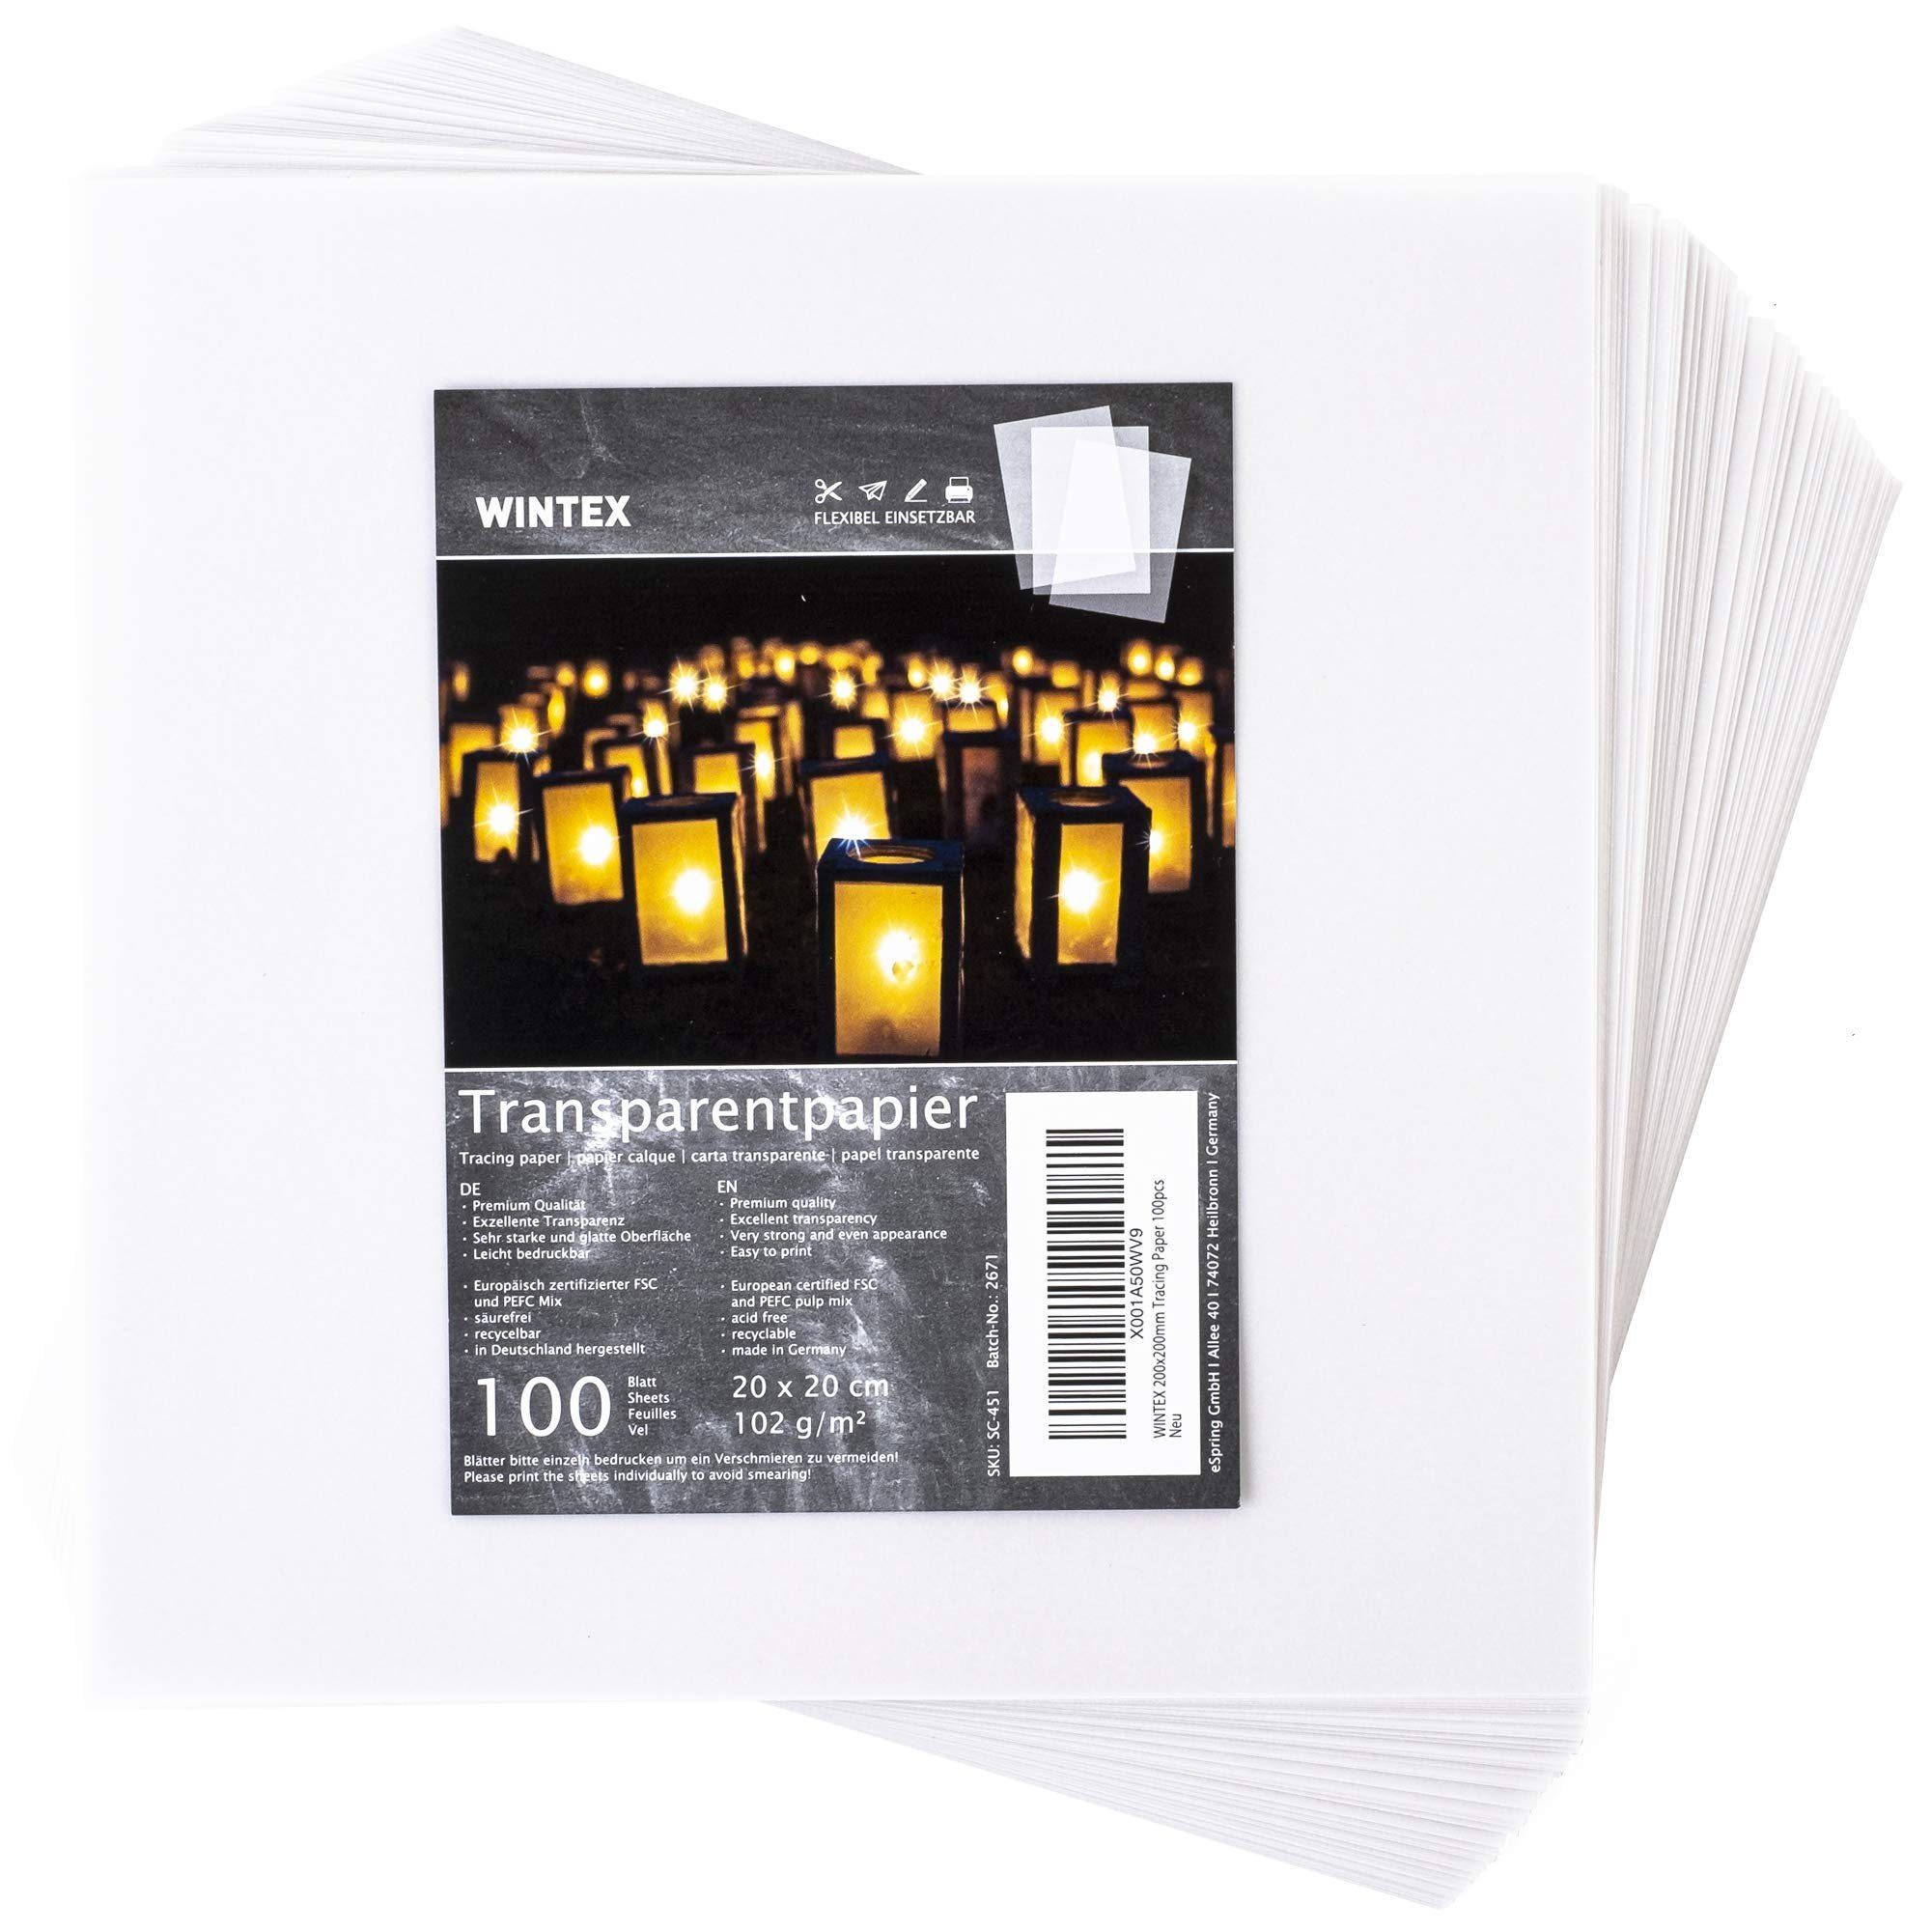 WINTEX Transparentpapier Transparentes Bastelpapier 20x20 cm, 100 Blatt, weiß & bedruckbar, Transparentes Papier, 20x20 cm, 100 Blatt